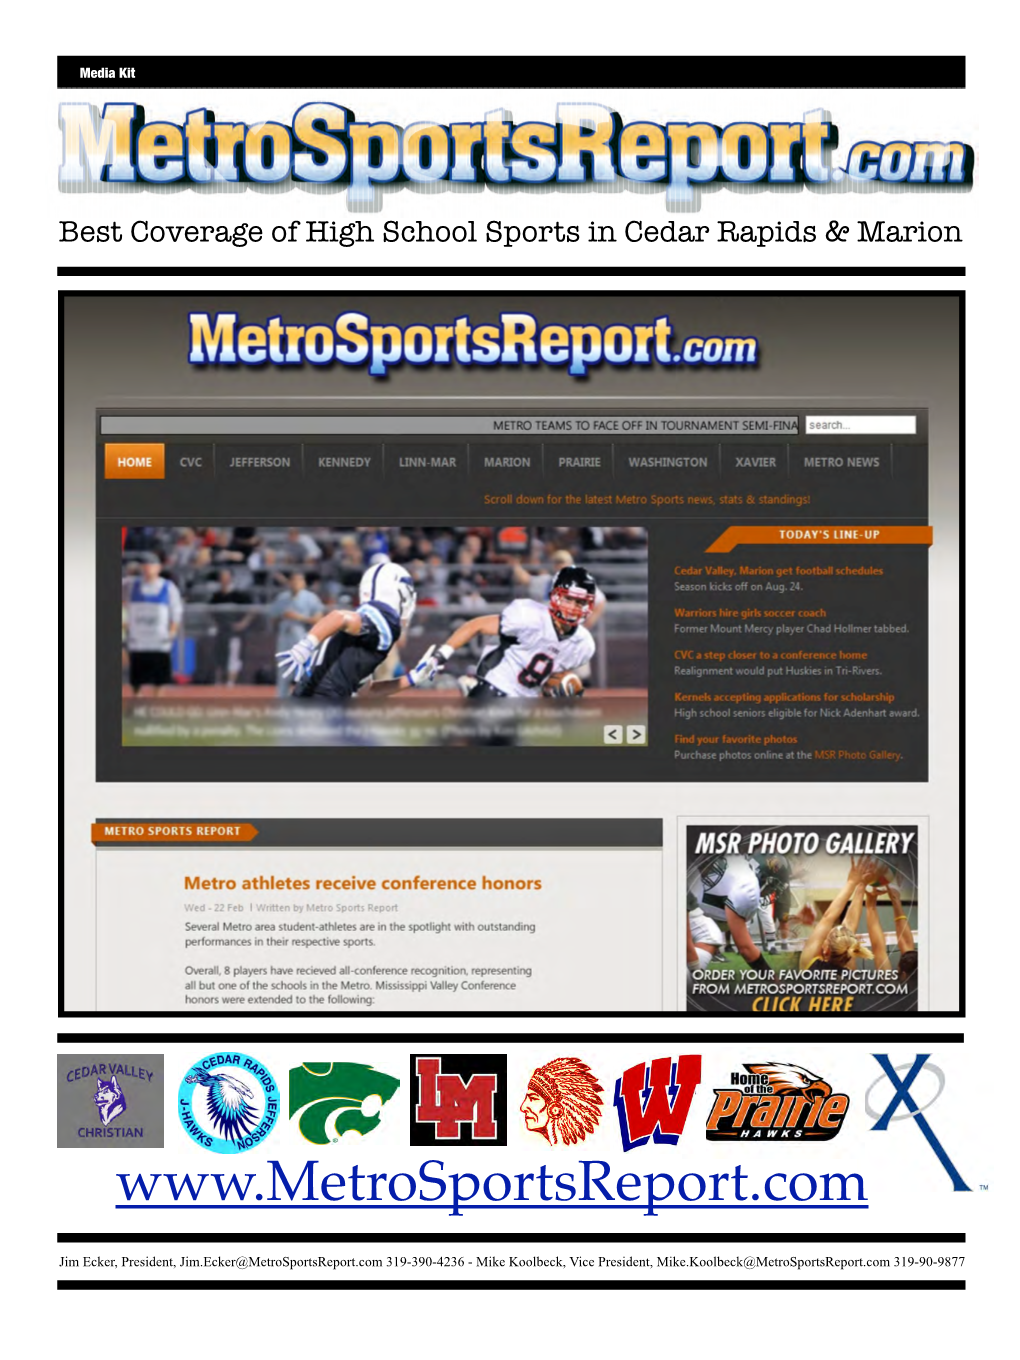 Metro Sports Report Advertising Information